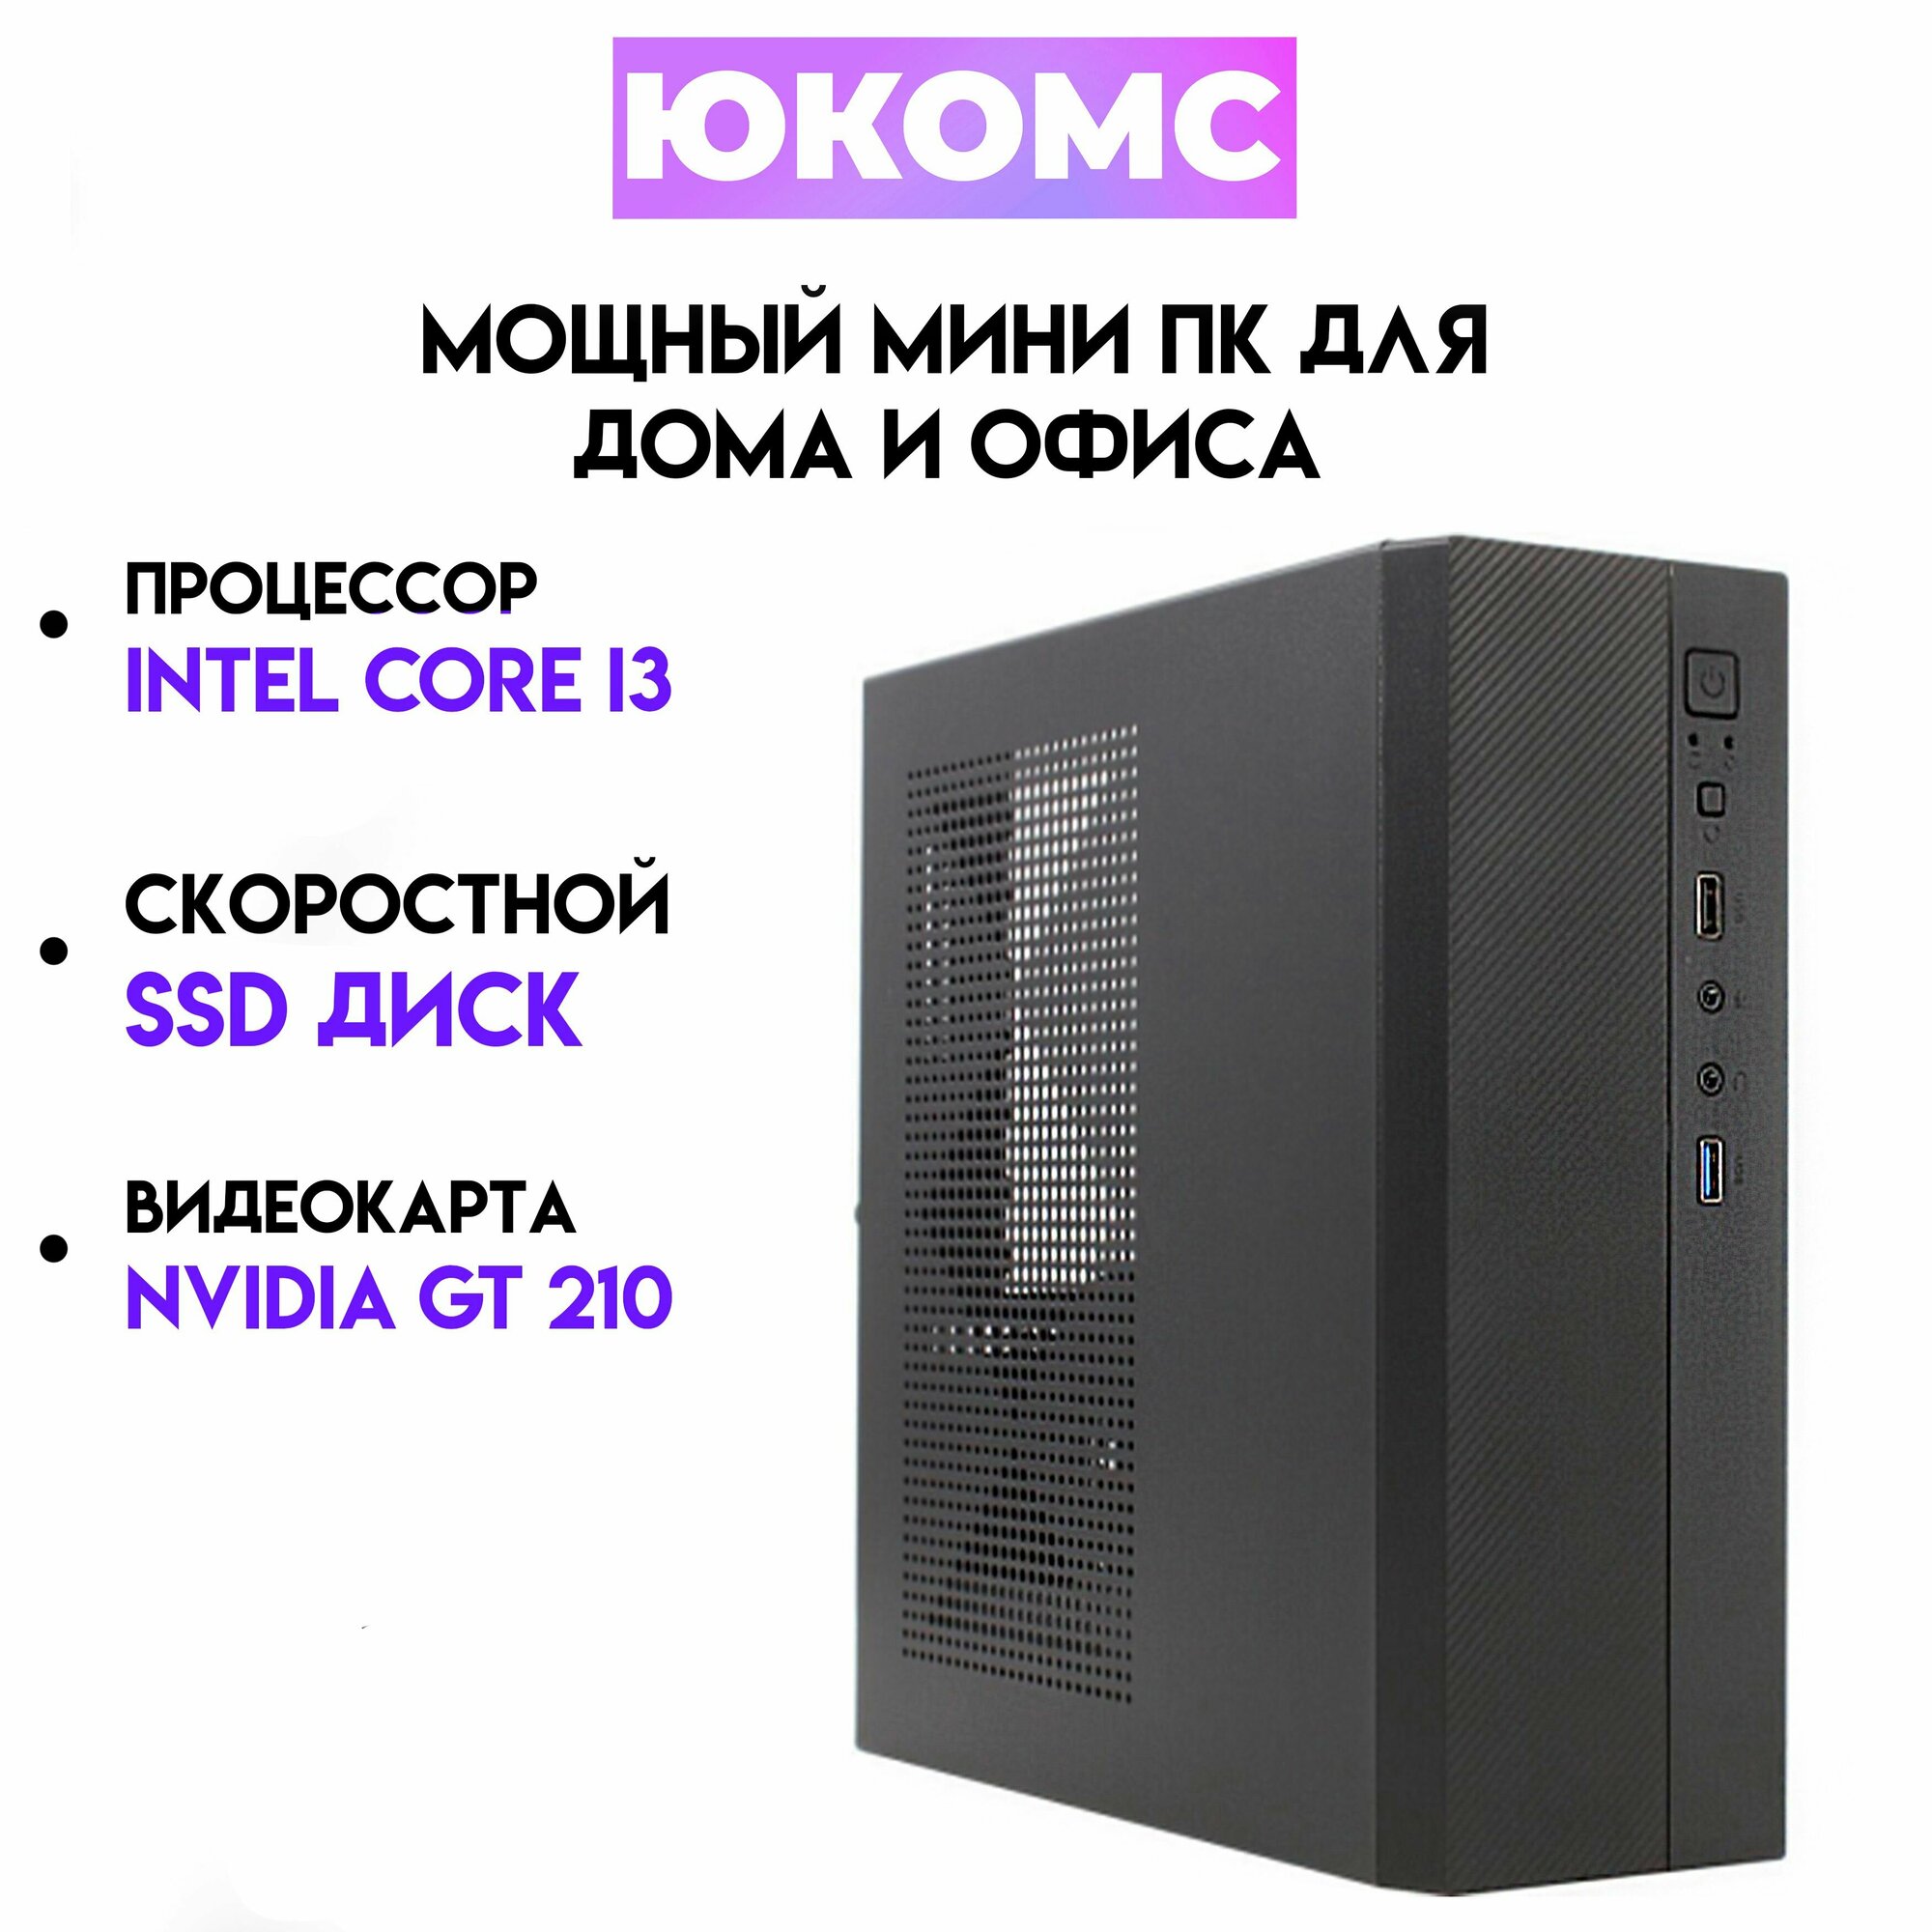 Мини PC юкомс Core i3 6100, GT 210 1GB, SSD 240GB, 4gb DDR3, БП 200w, win 10 pro, Exegate mini case